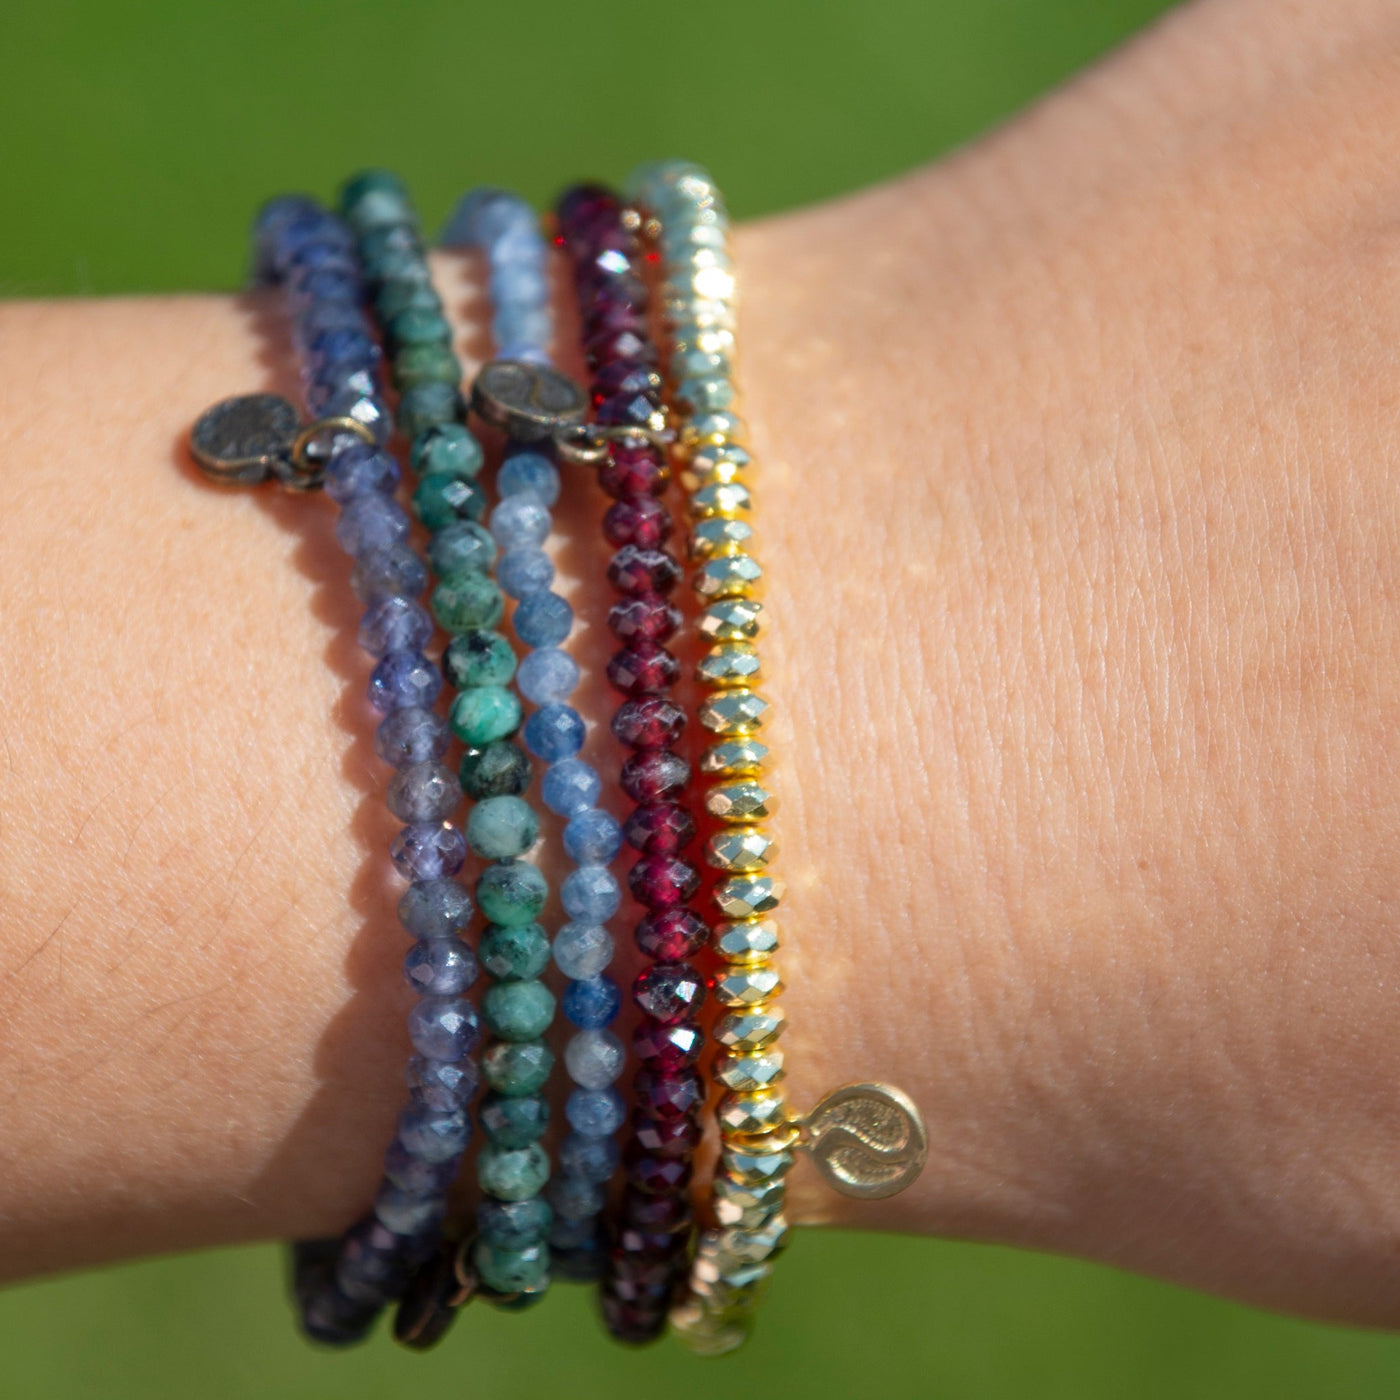 All 5 new mini gemstone bracelets by Energy Muse on woman's wrist 